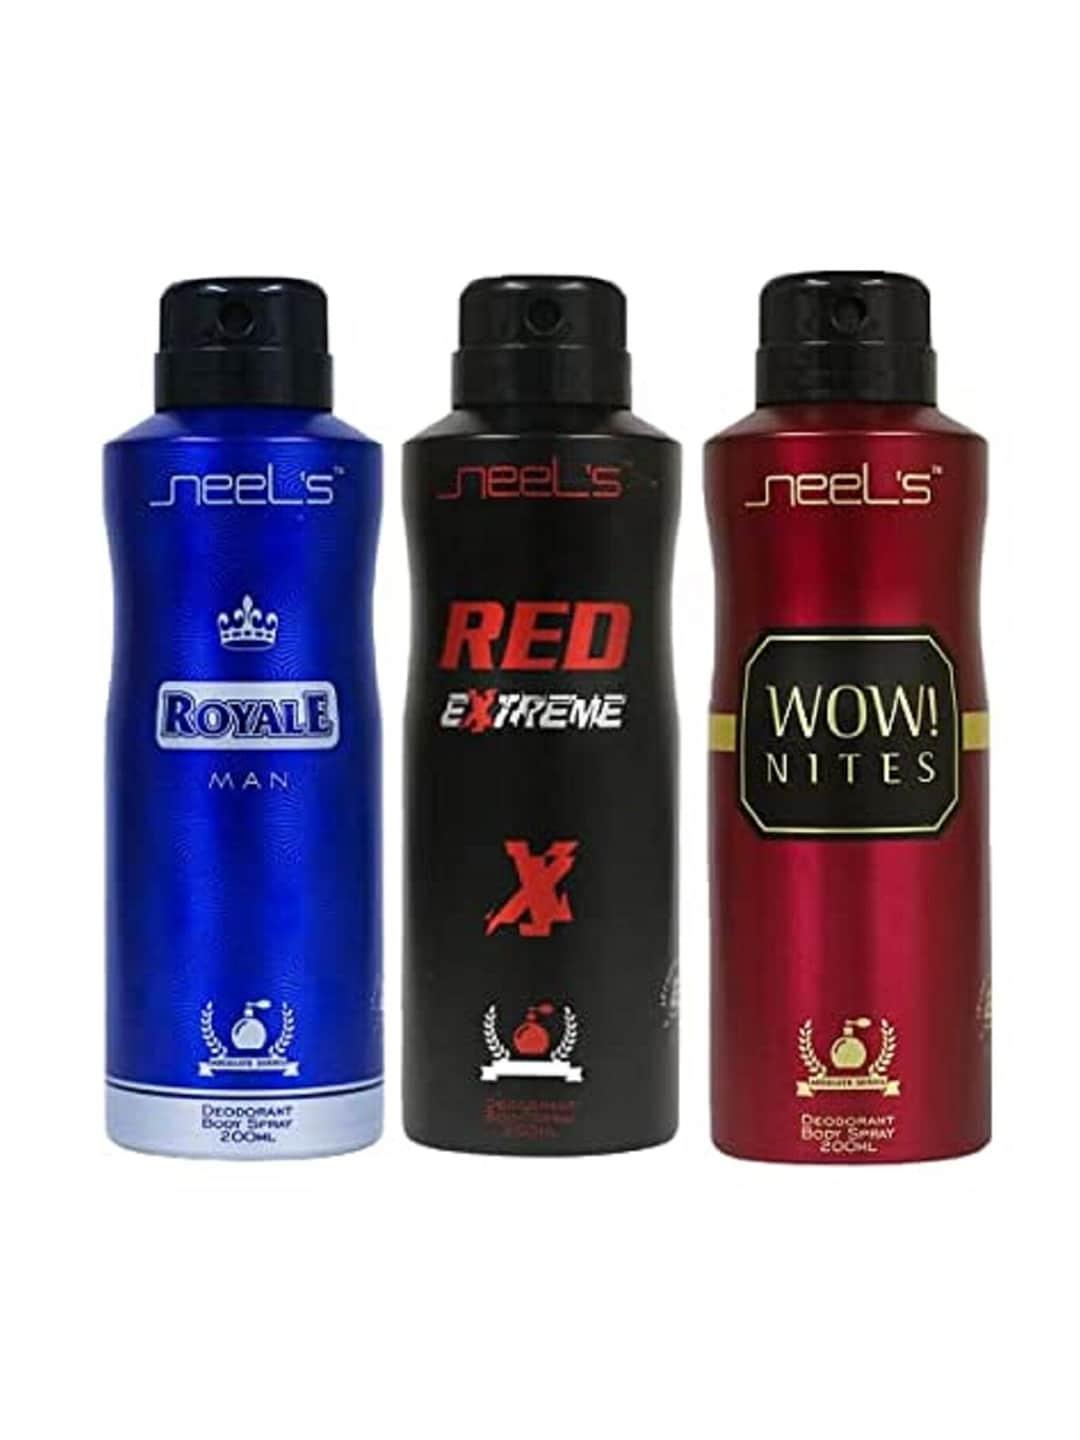 Neels Set of Royale Man + Red Extreme + Wow Nites Deodorant Body Spray - 200 ml Each